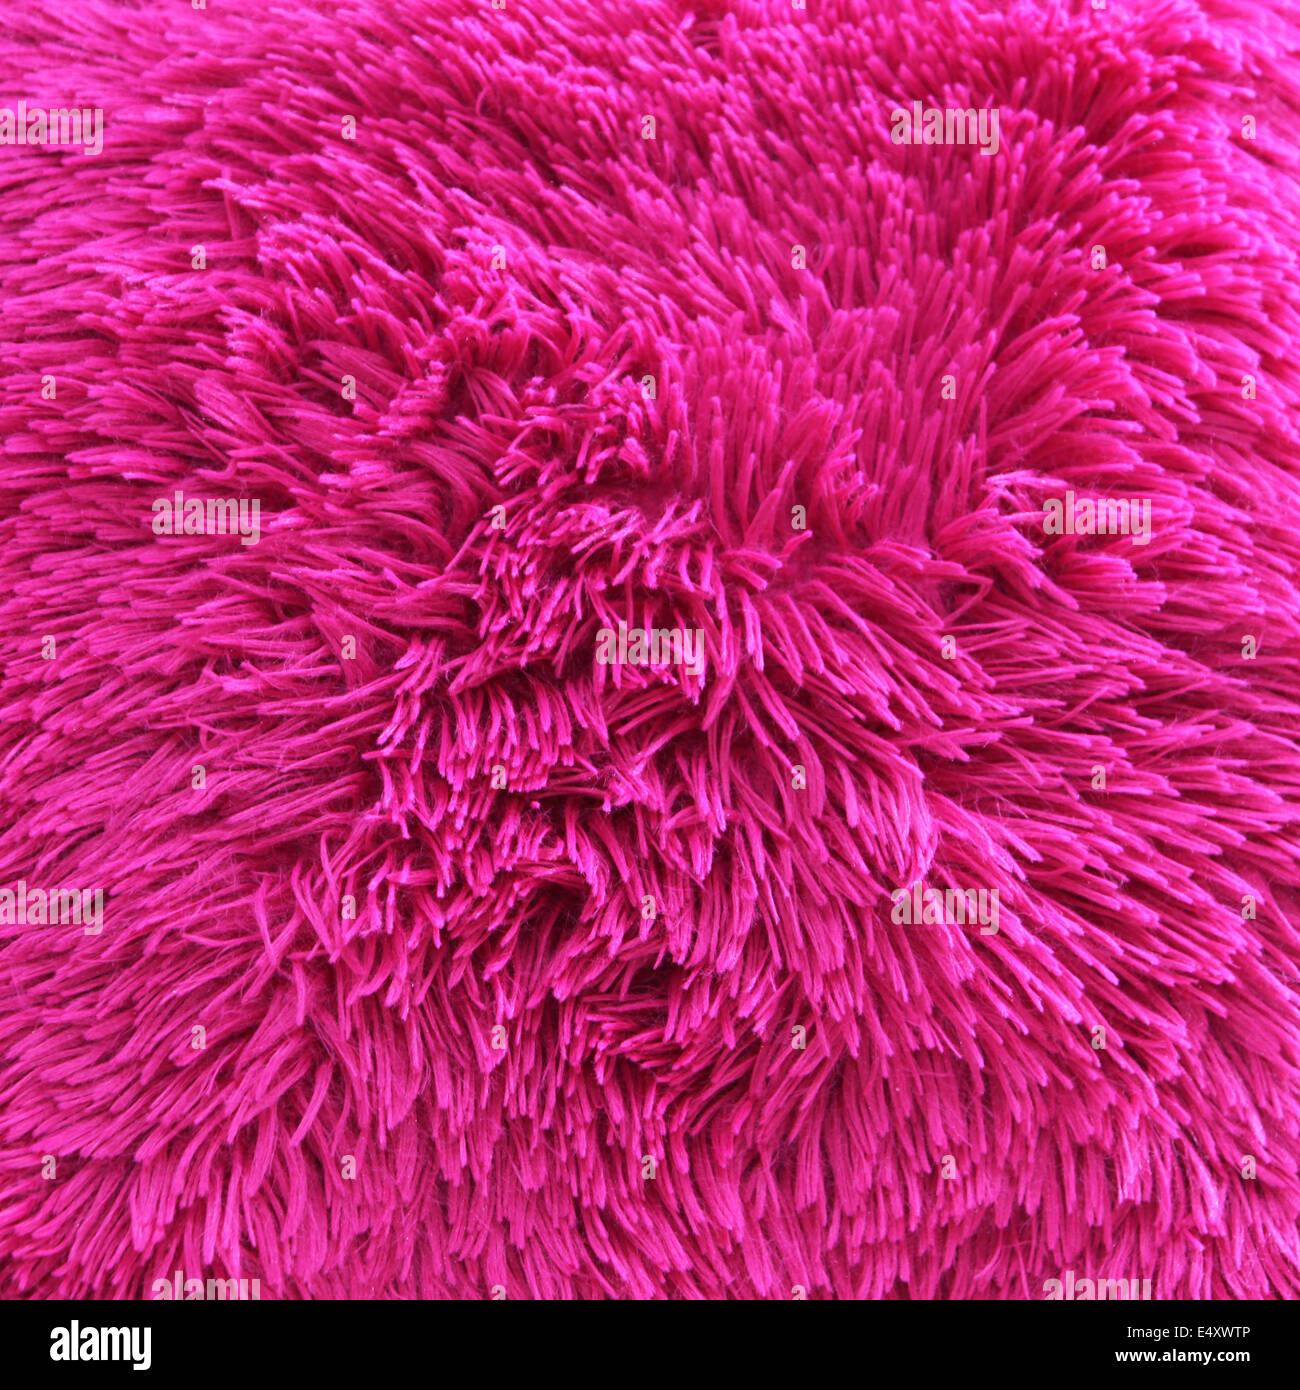 Vivid pink shaggy carpet pile Stock Photo